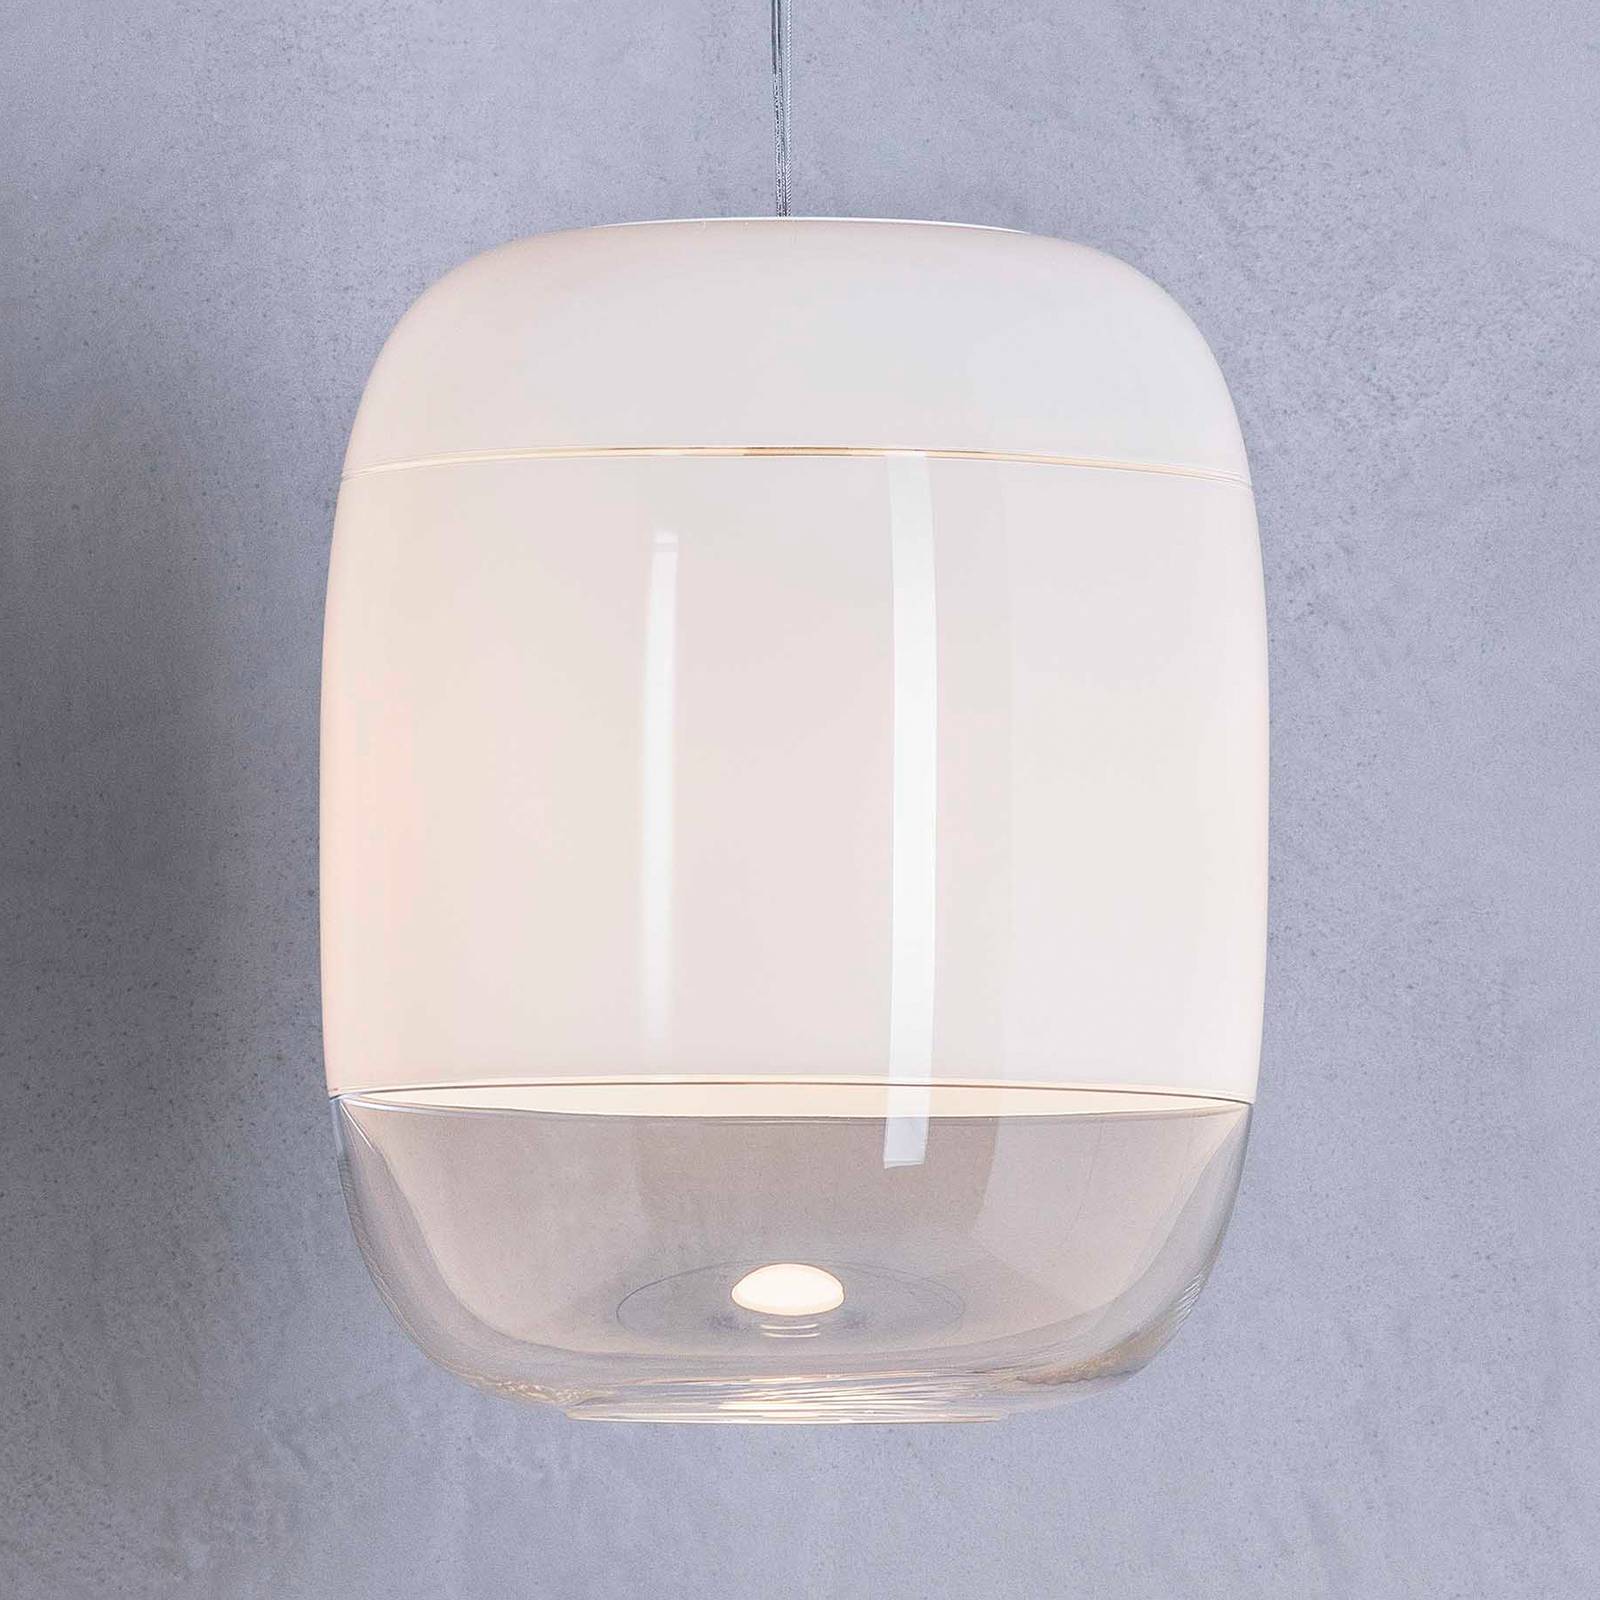 Prandina gong s3 függő lámpa fehér